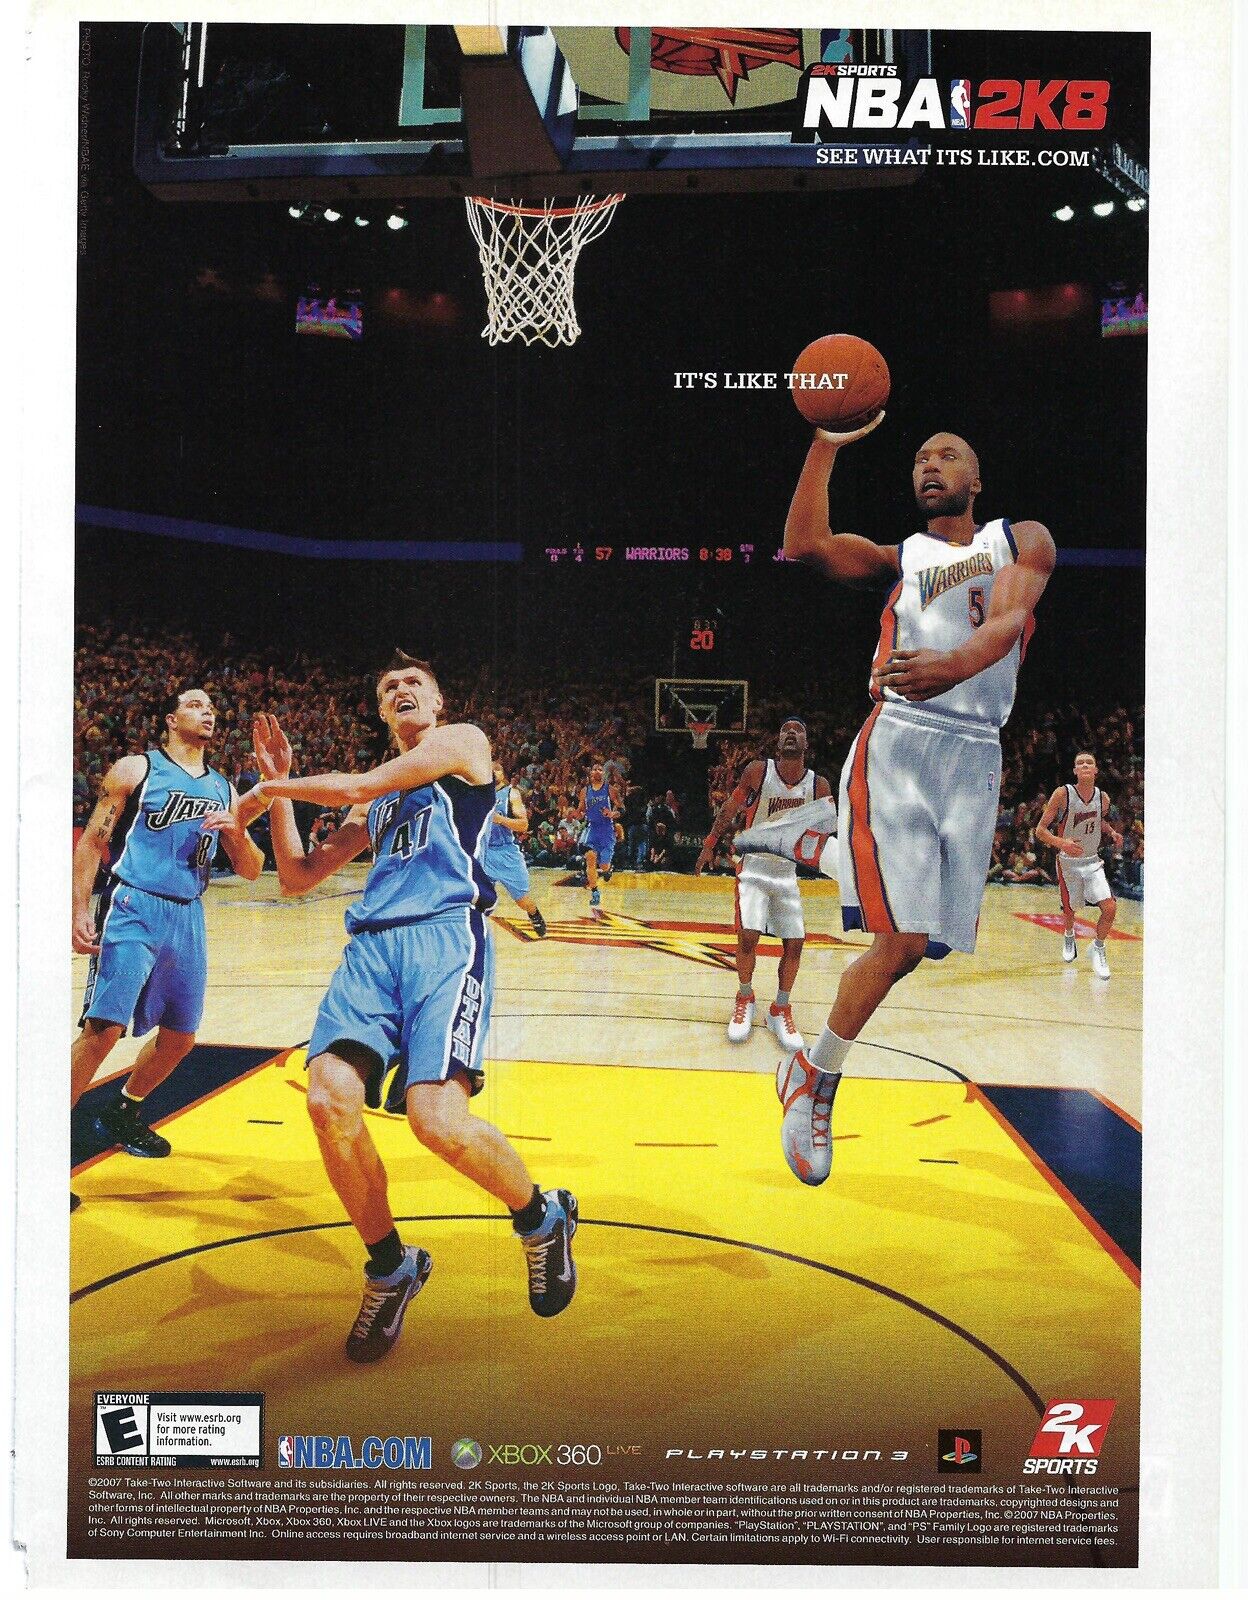 2007 NBA 2K8 2K Sports Take-Two Interactive Video Game Retro Print Ad/Poster